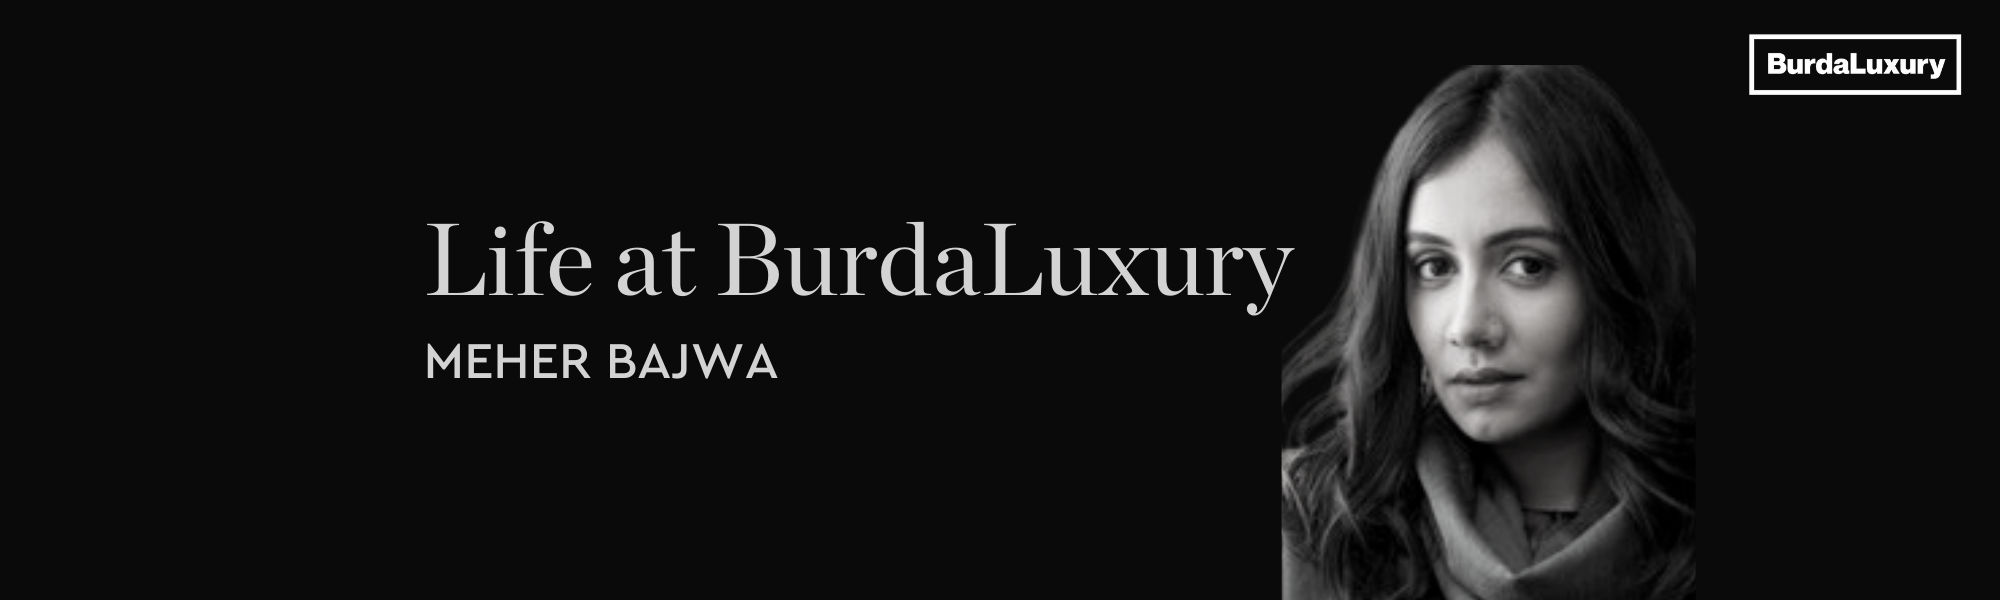 Life at BurdaLuxury Banner - Meher Bajwa